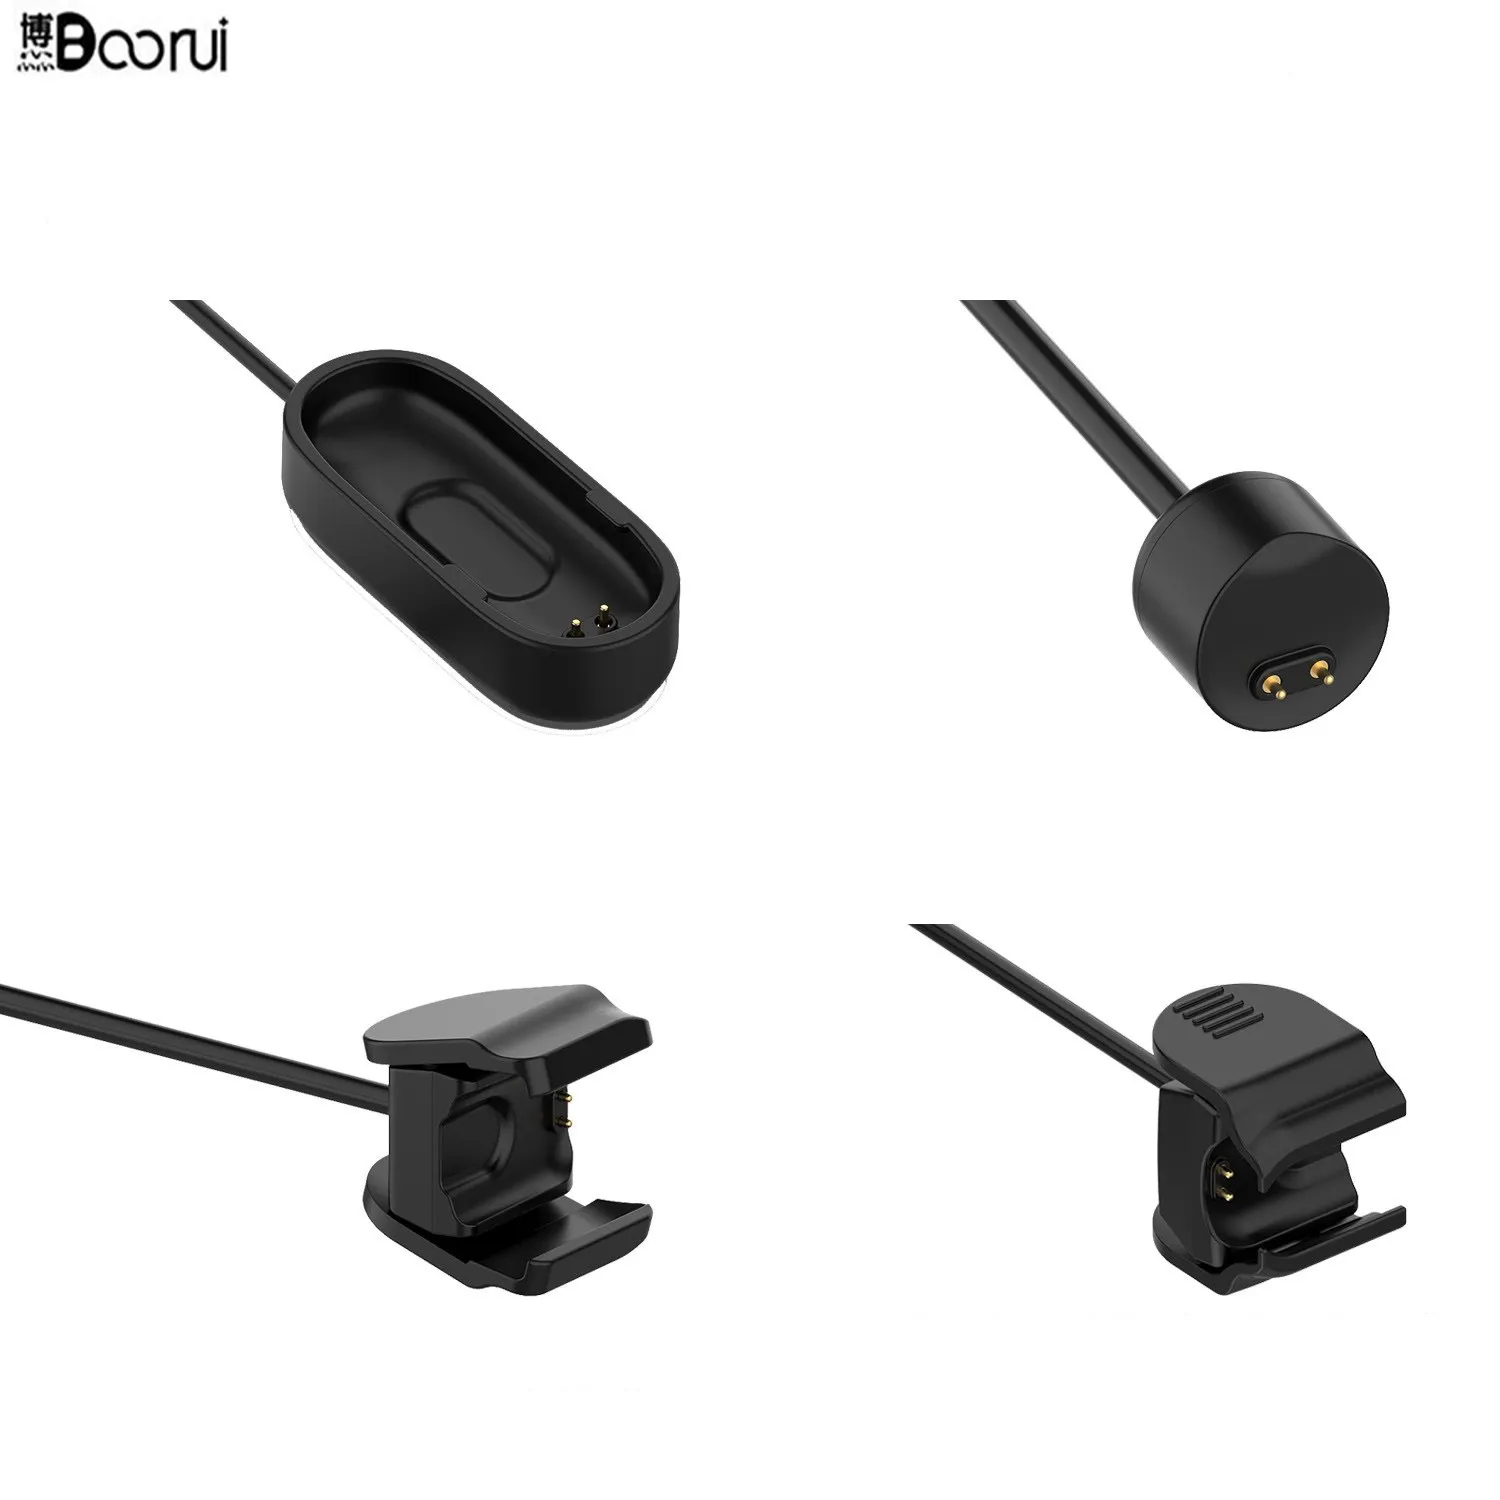 BOORUI Plastic mi band 4 charger cable USB charging clip for Xiaomi Mi band 4 5